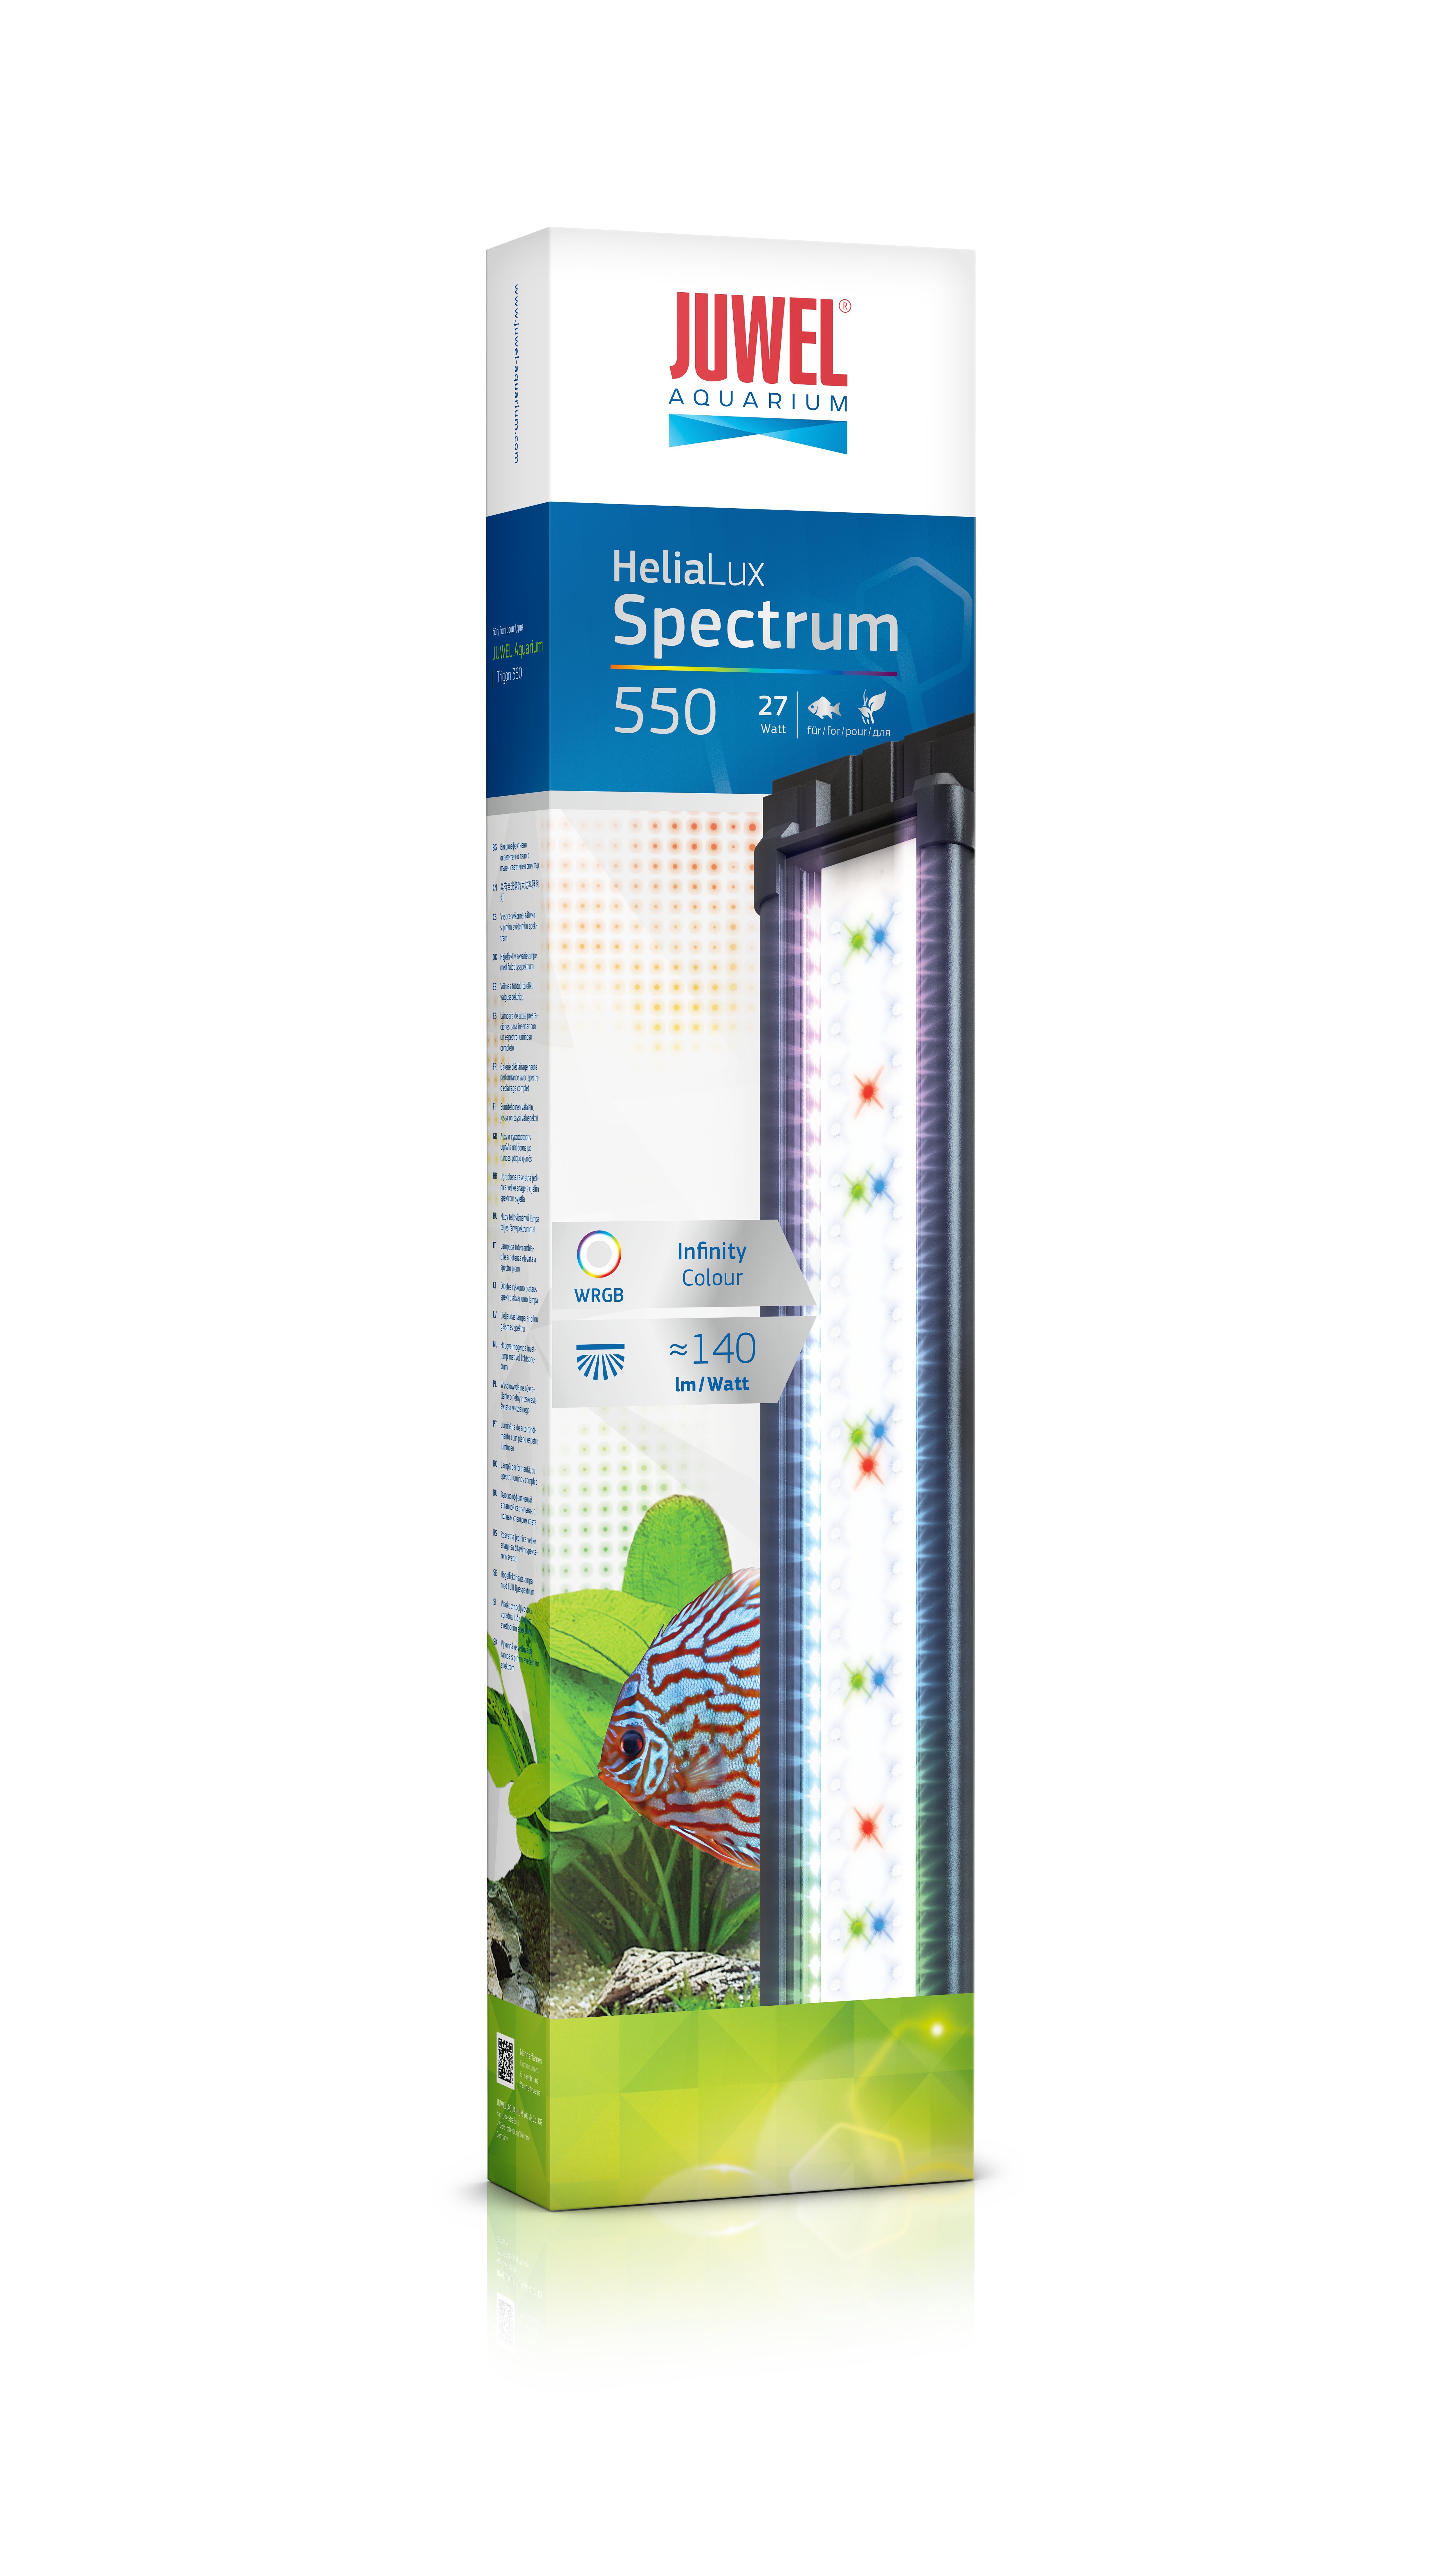 Juwel HeliaLux Spectrum LED - 550 mm, 27 W | aquaristic.net